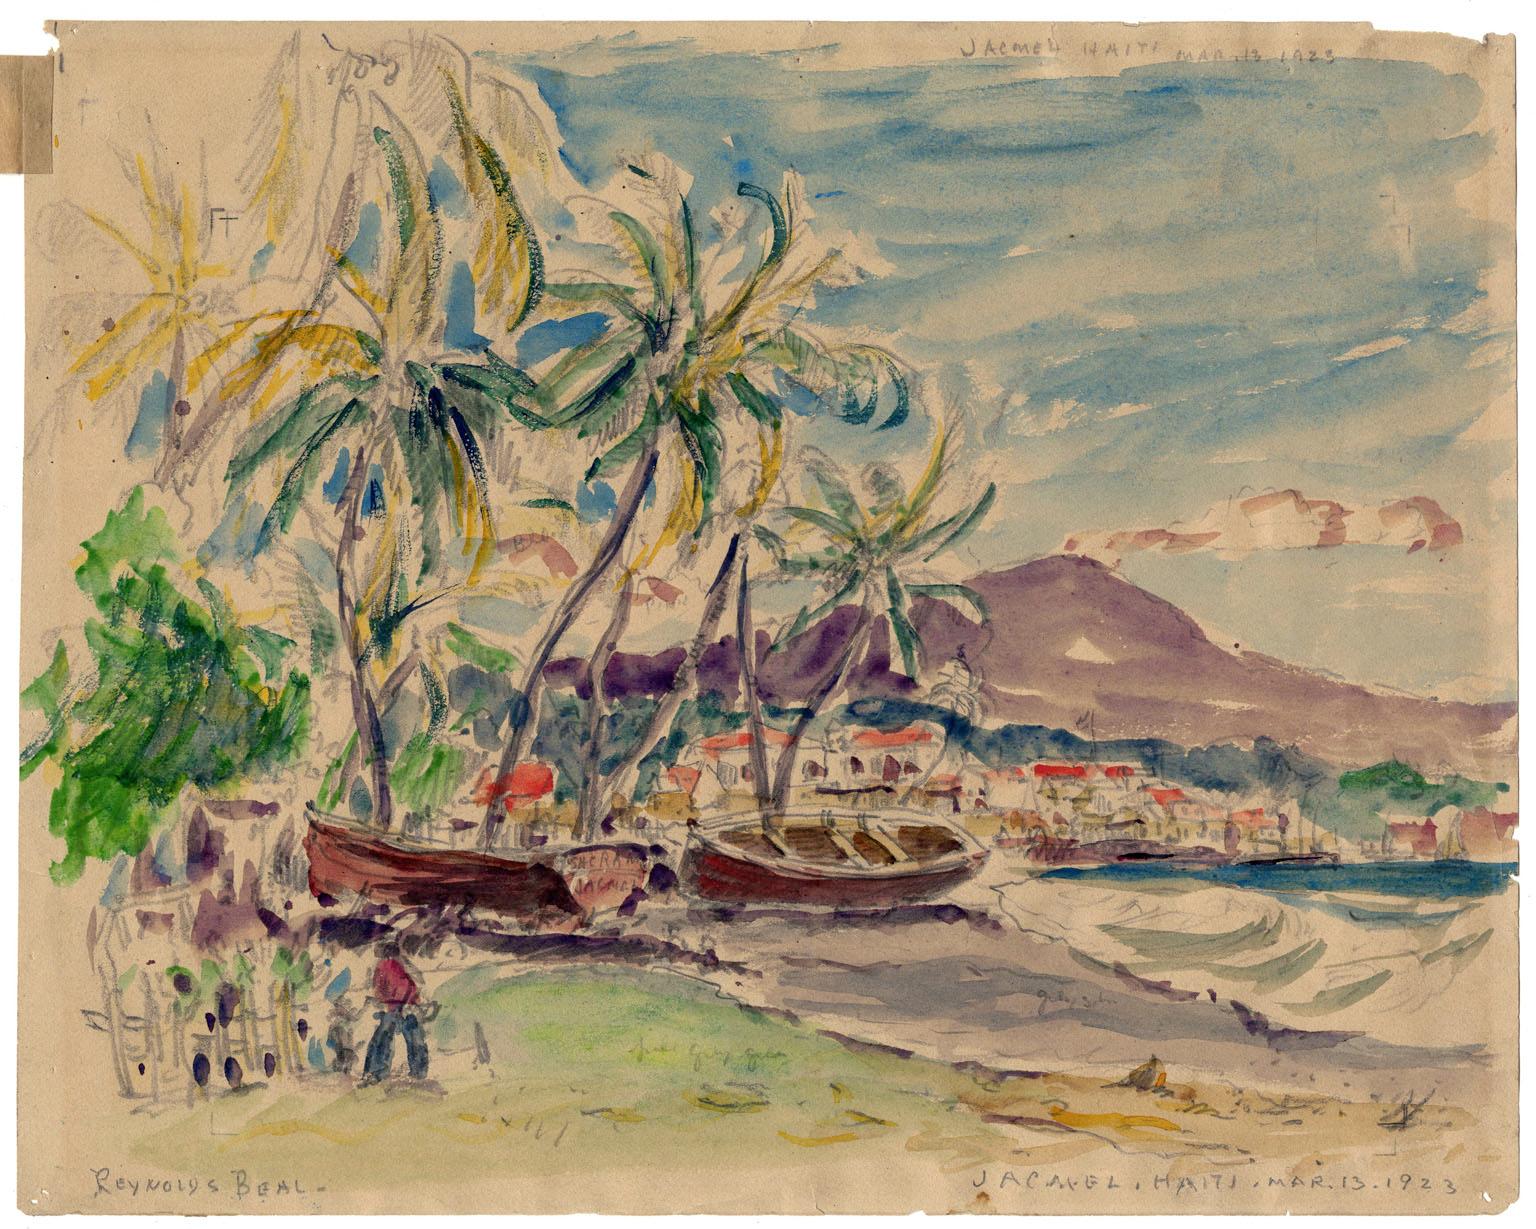 Jacmel, Haiti, Mar. 13, 1923. - Art by Reynolds Beal